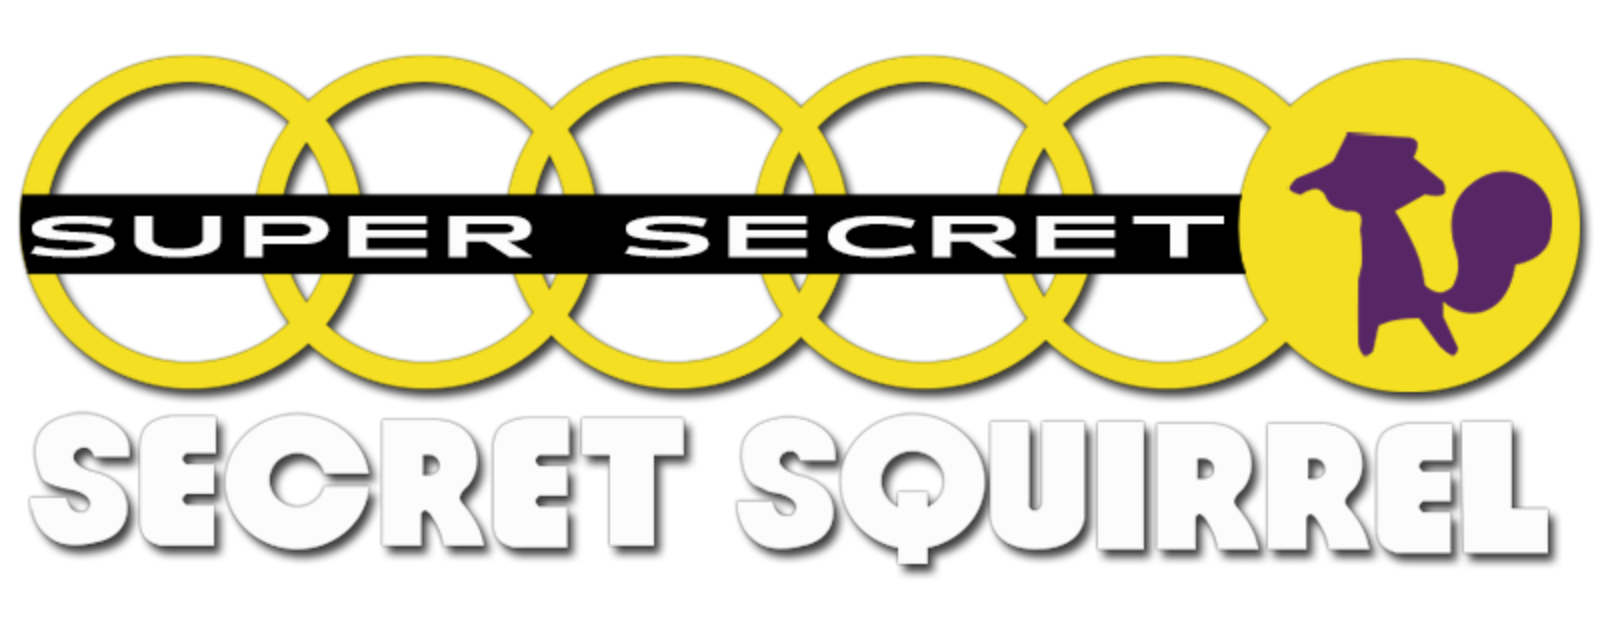 Super Secret Secret Squirrel Complete (1 DVD Box Set)